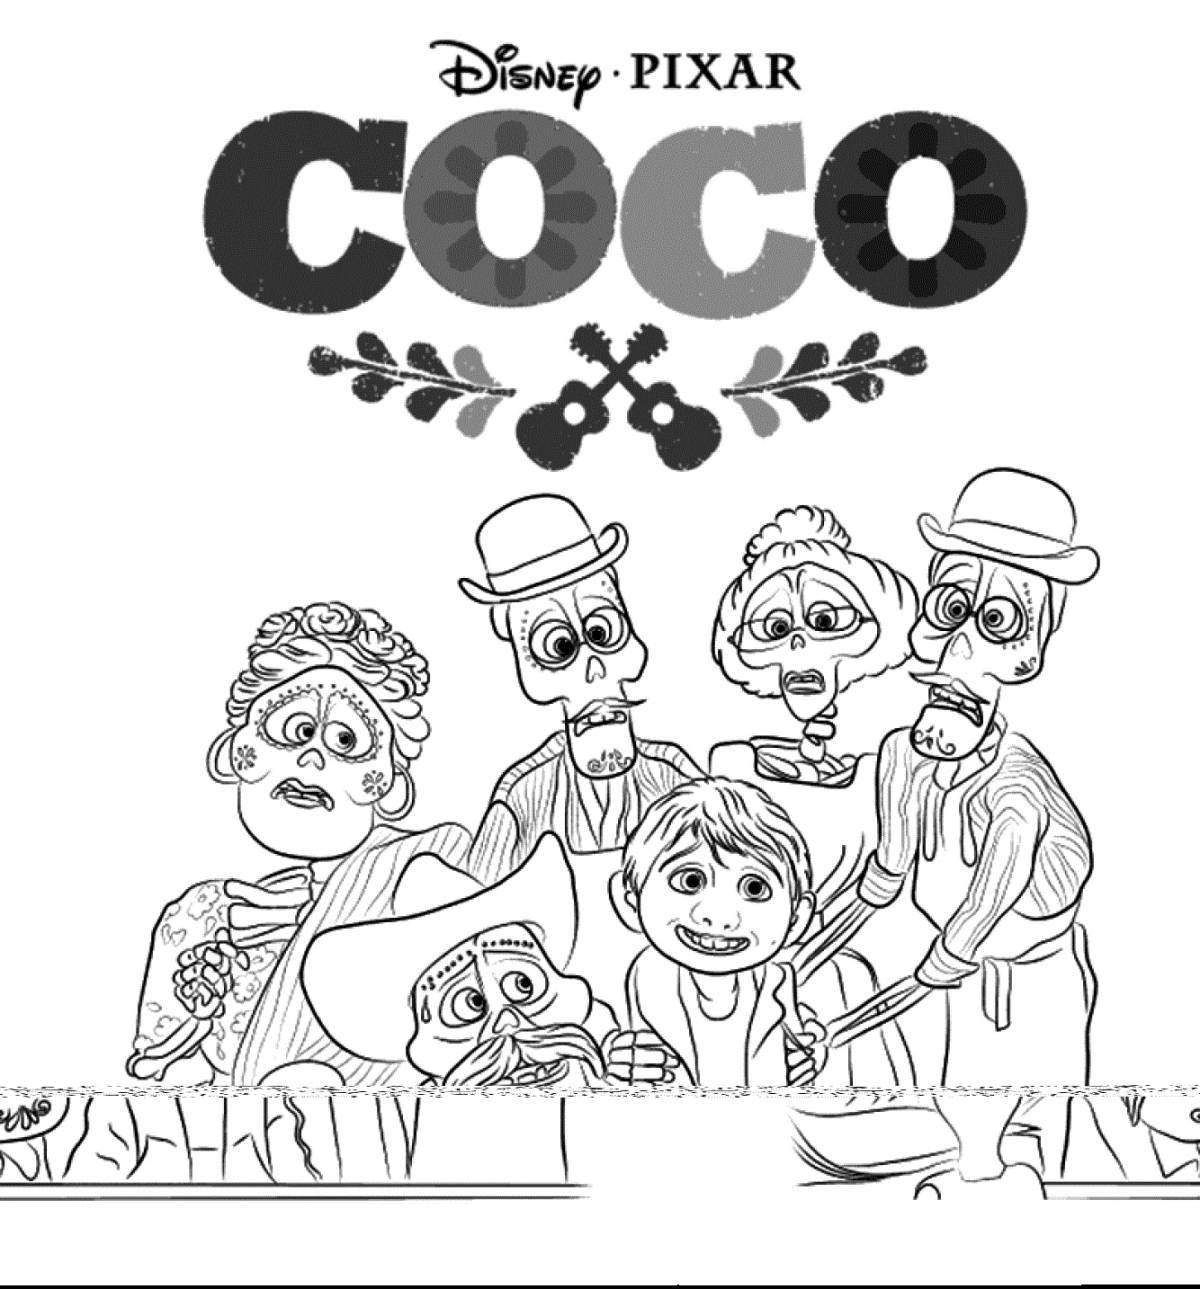 Coco funny coloring